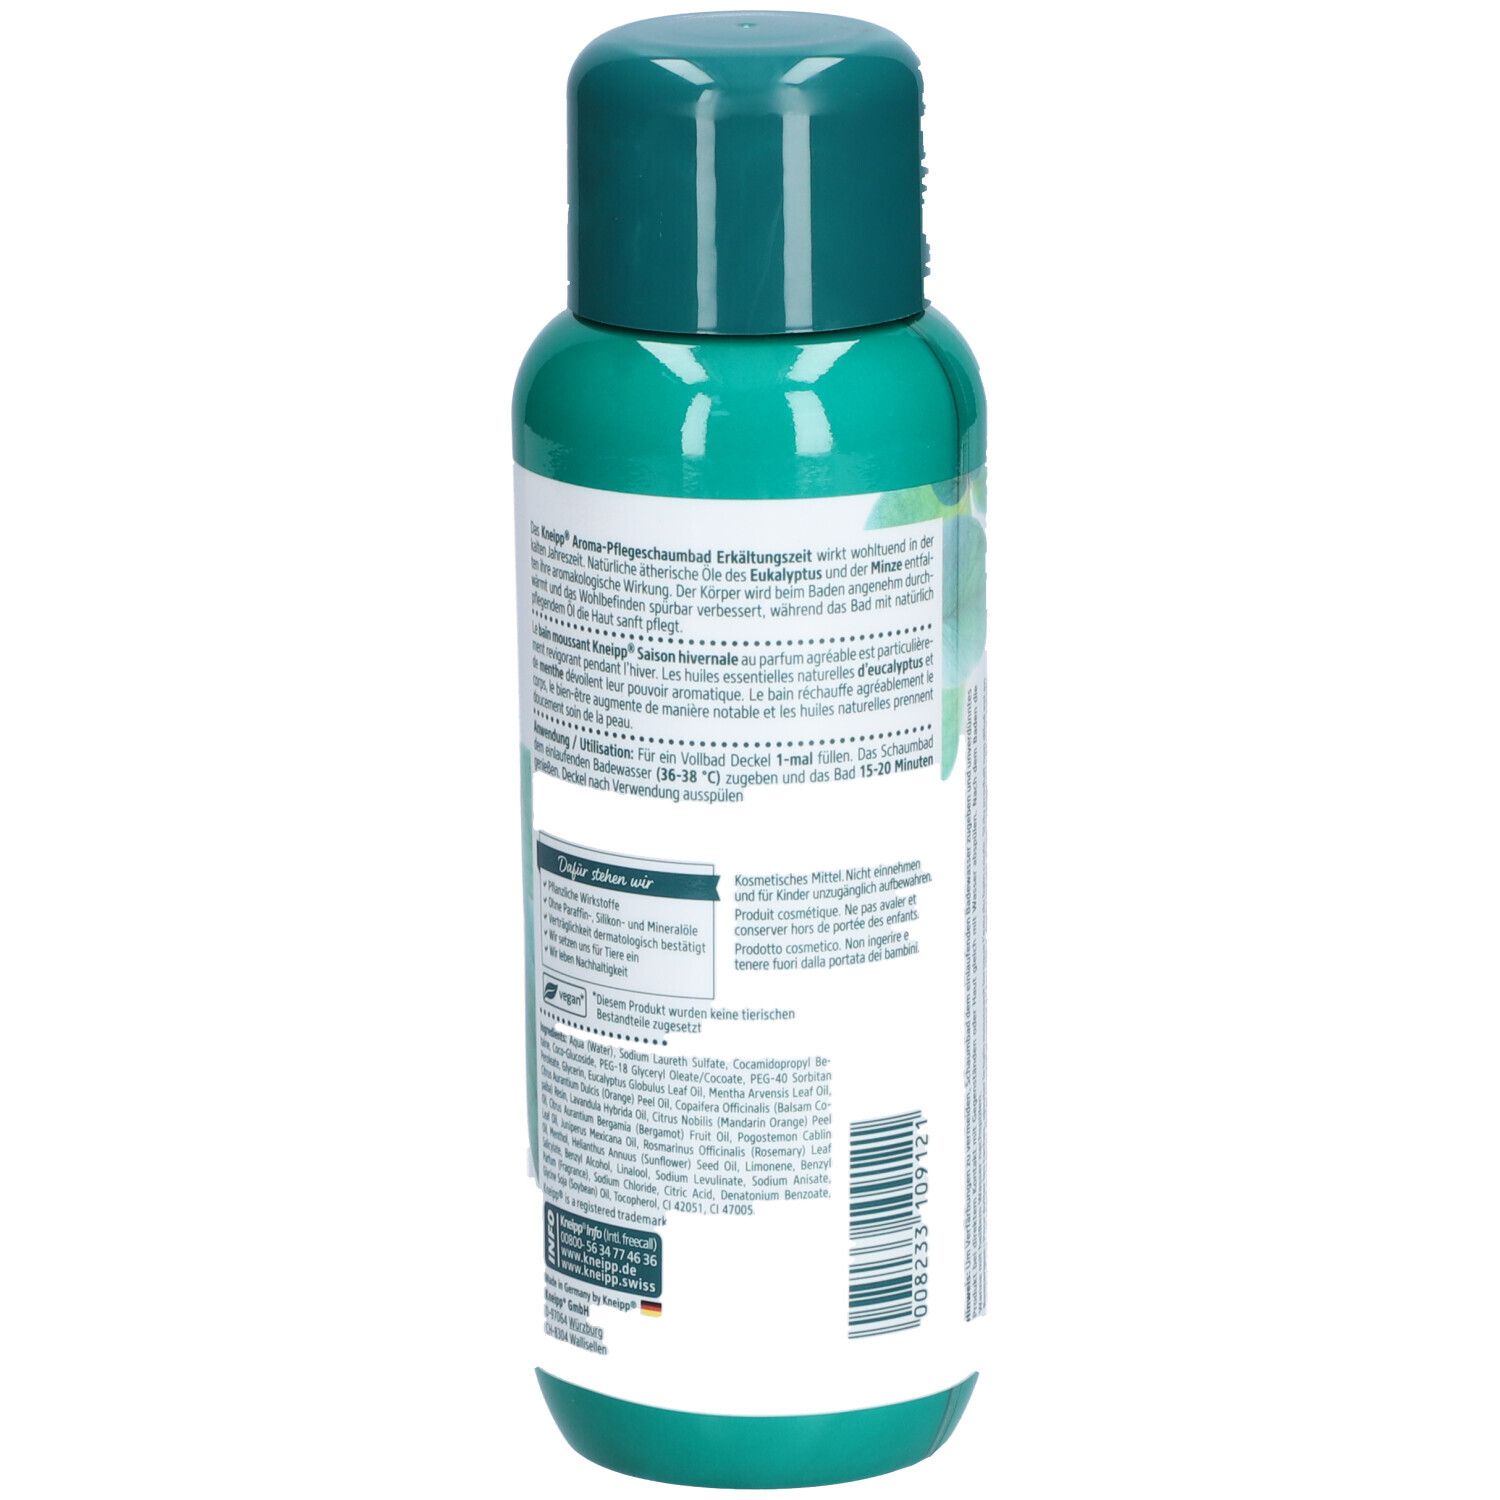 Kneipp® Aroma-Pflegeschaumbad Erkältungszeit Eukalyptus & Minze